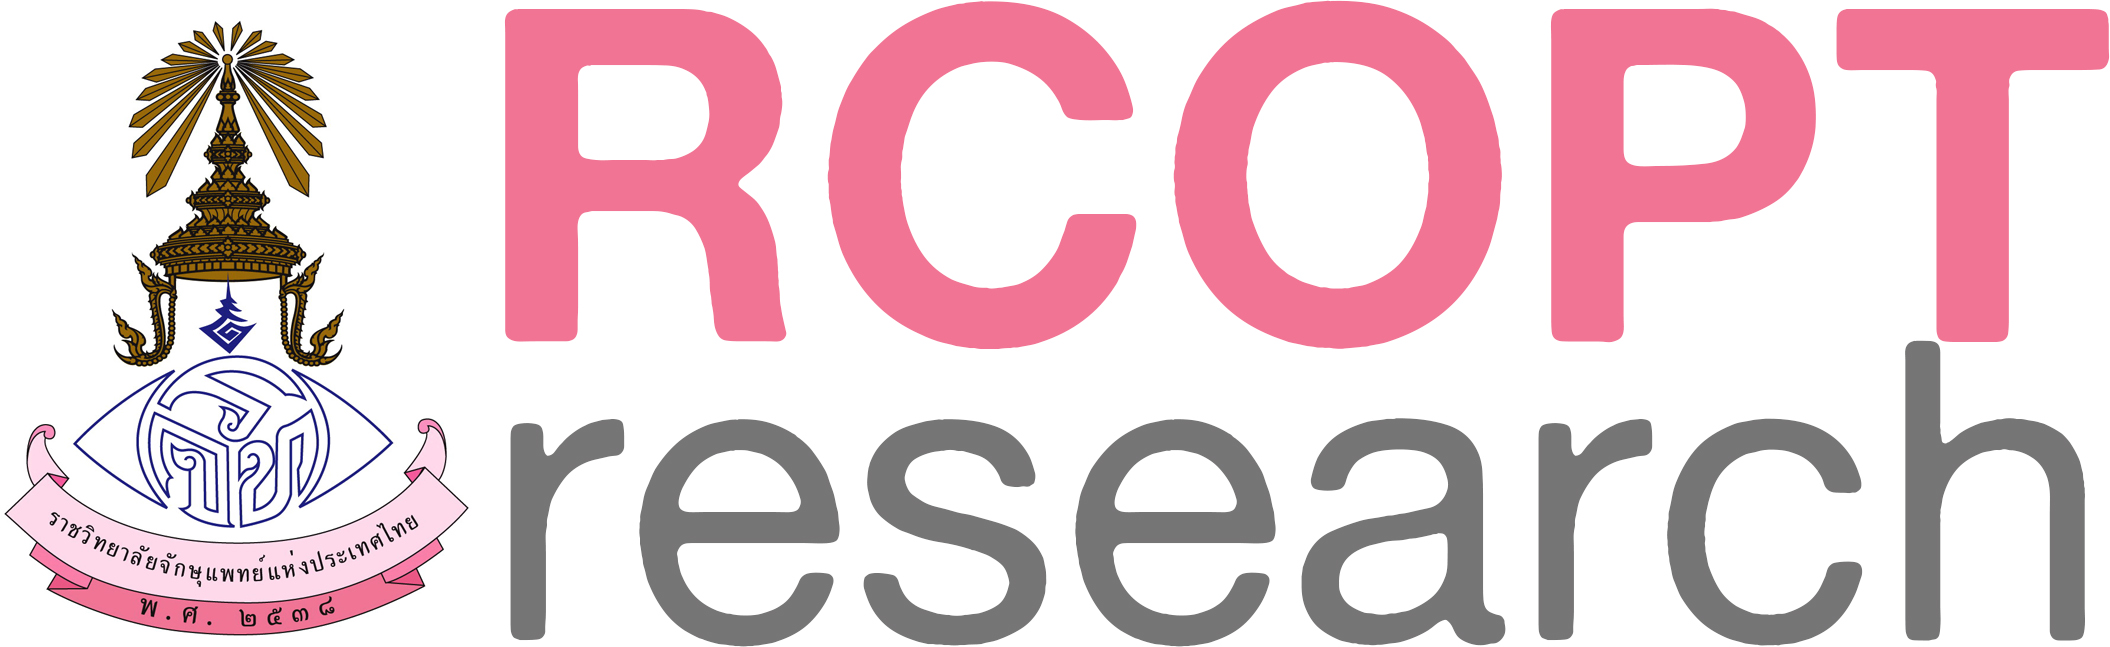 2131RCOPT research logo1.jpg